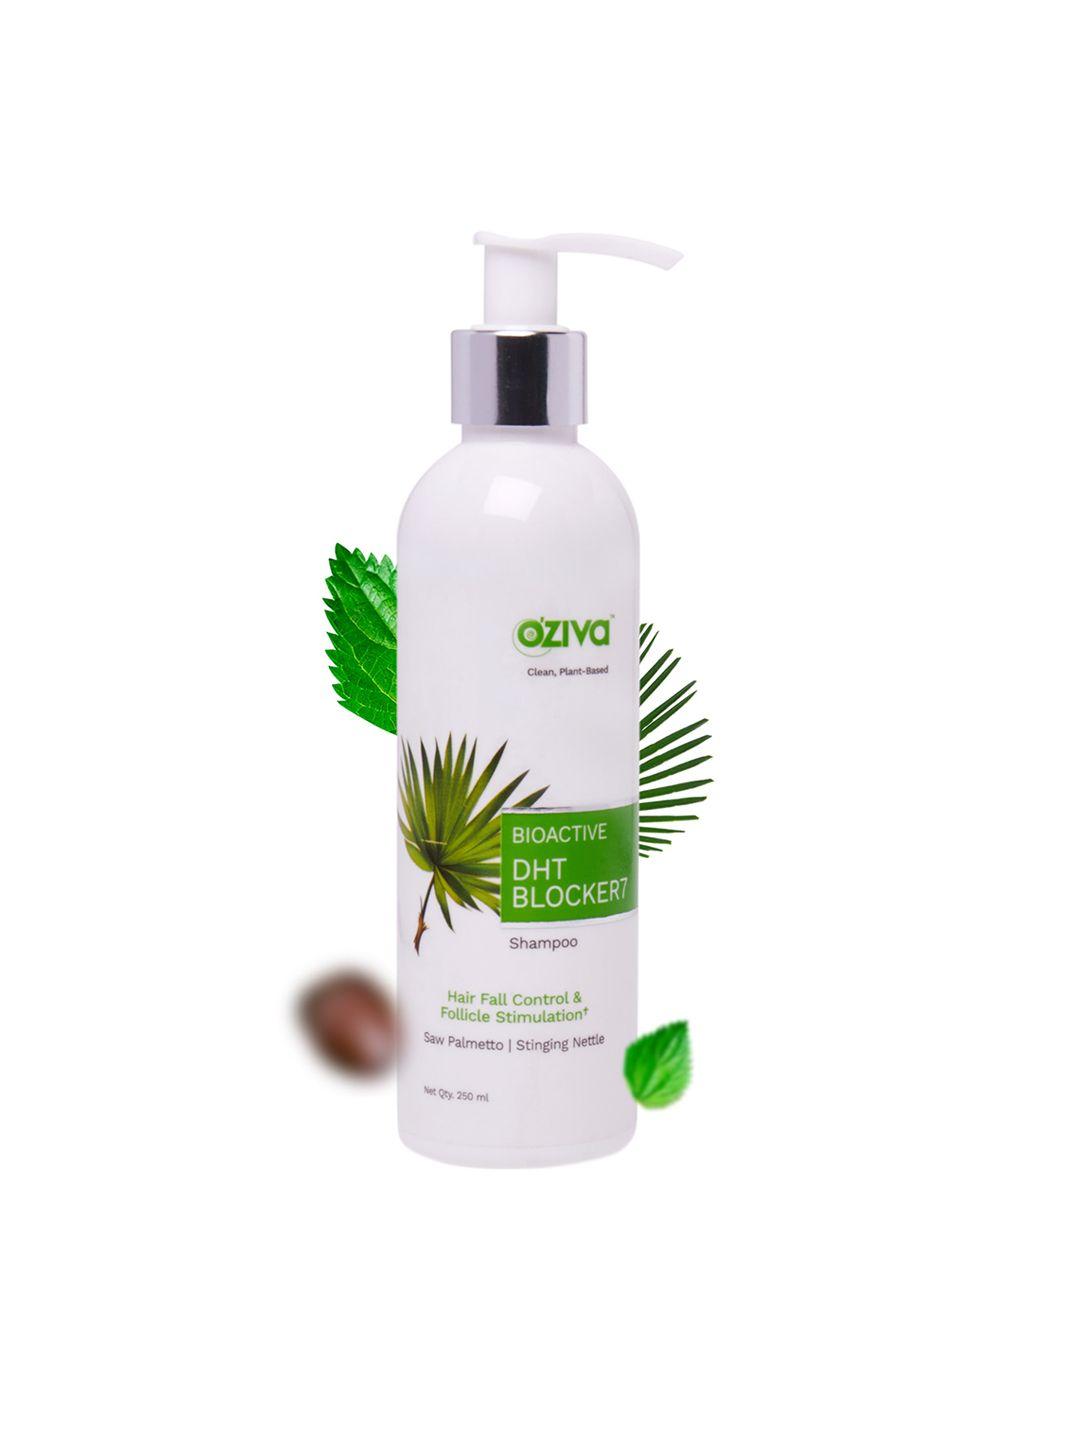 oziva bioactive dht blocker7 shampoo 250ml